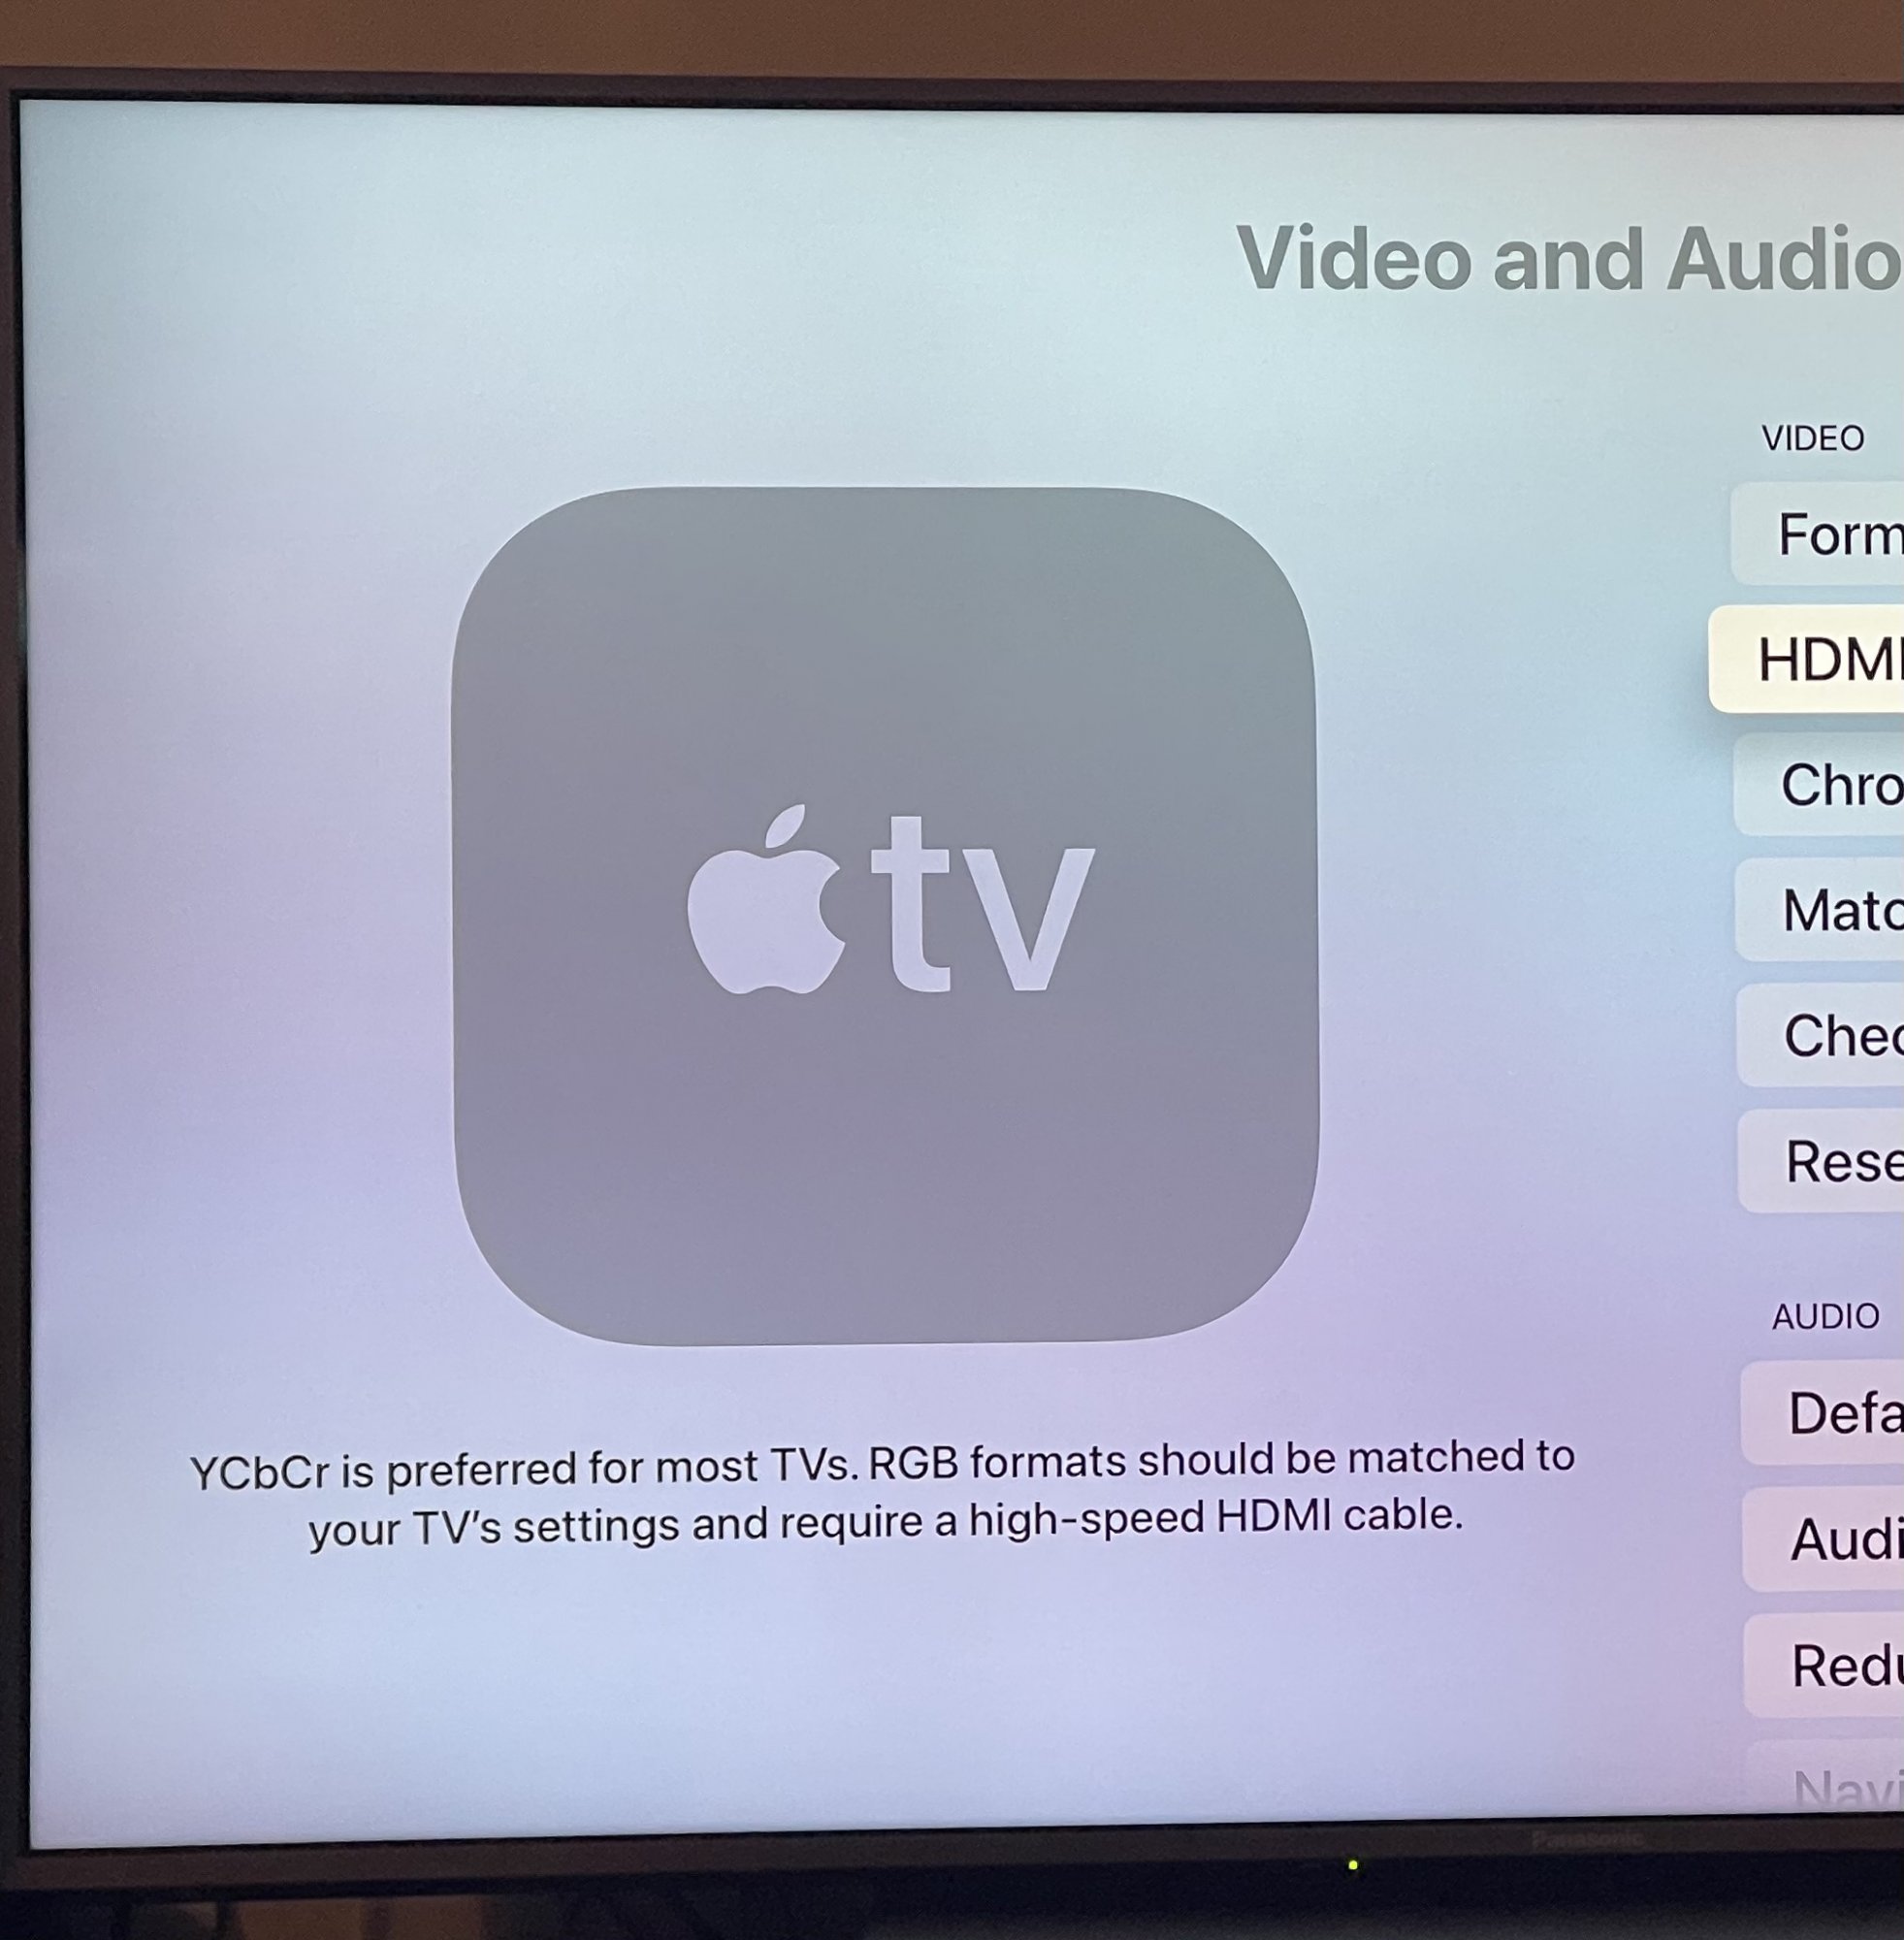 erstatte Gulerod Æsel Should Apple TV be set to YcB or RGB High? | MacRumors Forums